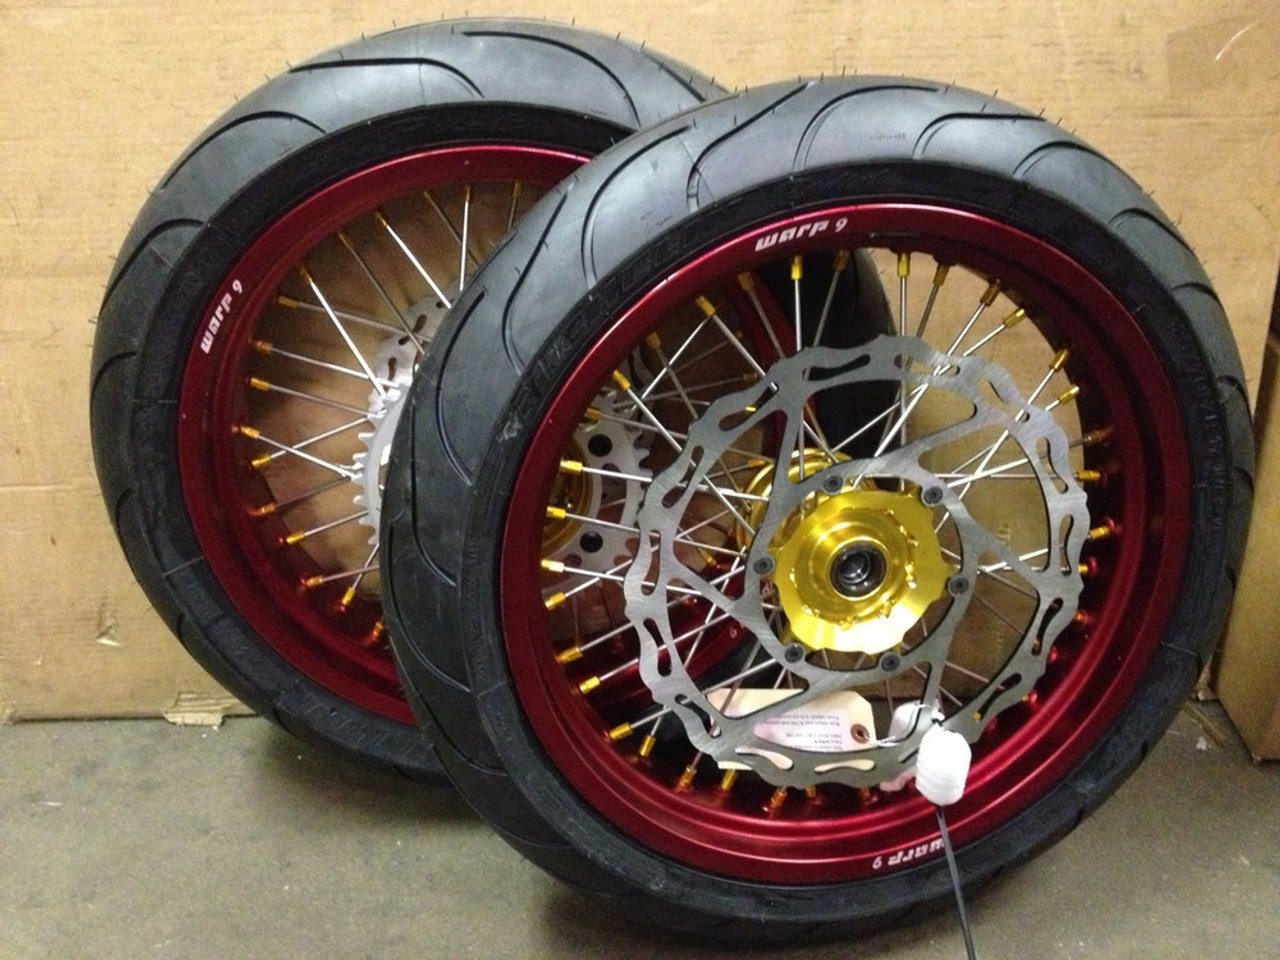 Warp 9 Supermoto Wheels with Tires